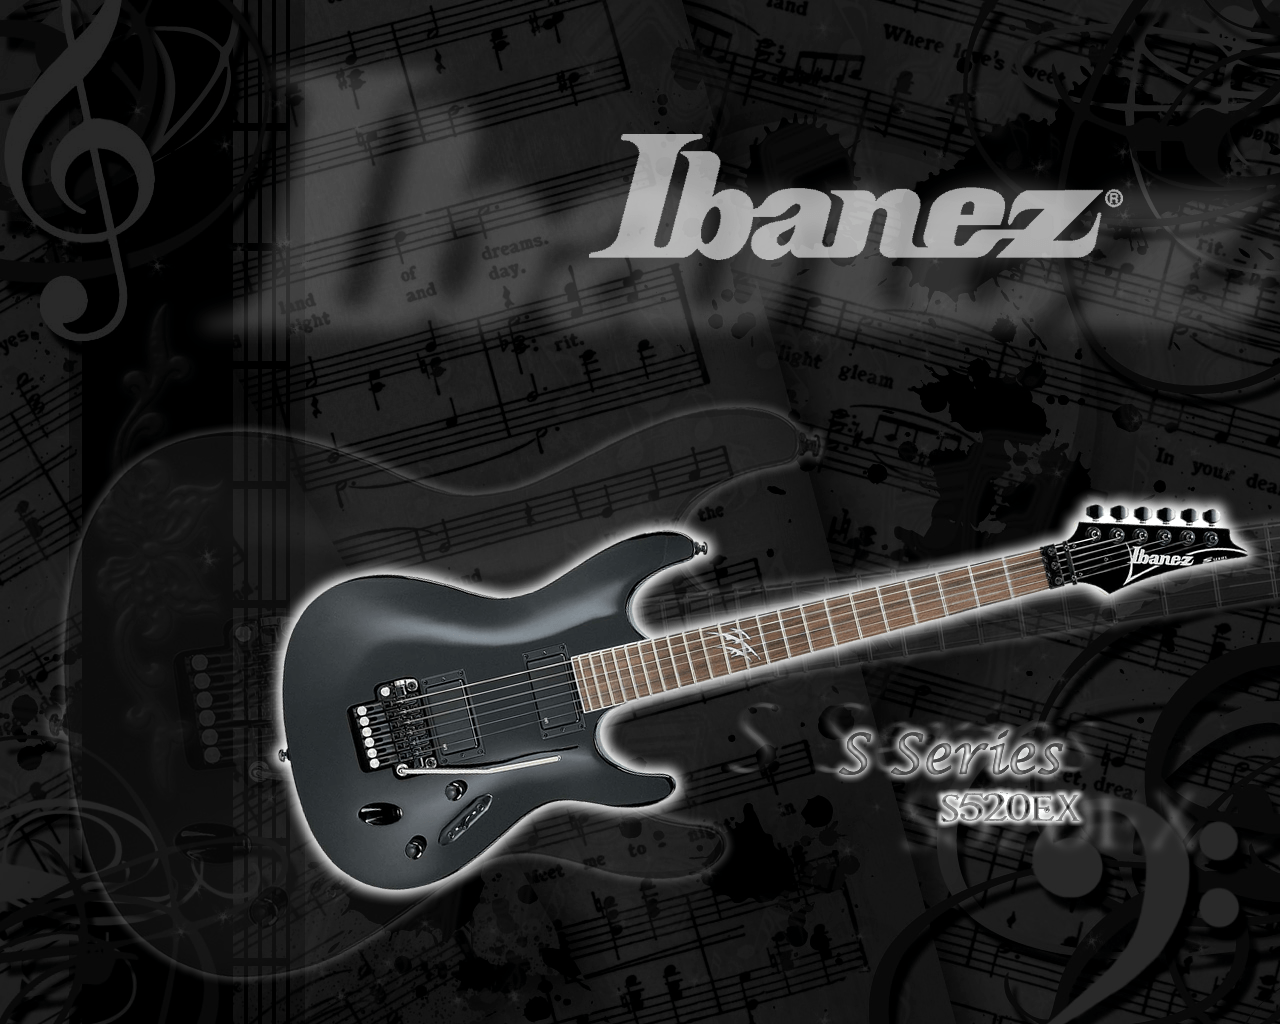 Ibanez Guitars Wallpaper